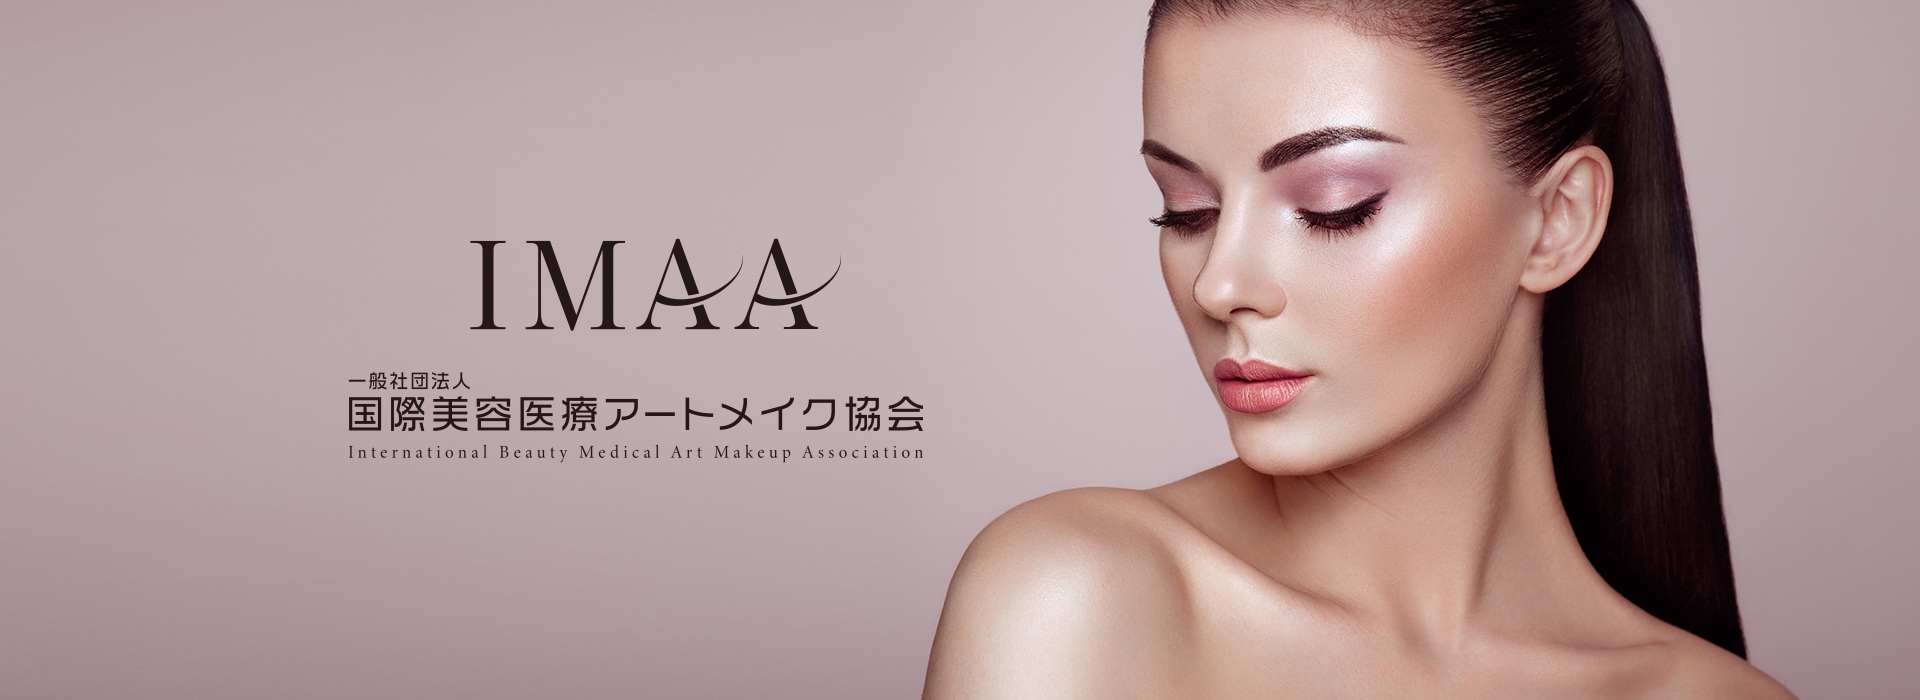 IMAA 国際美容医療アートメイク協会